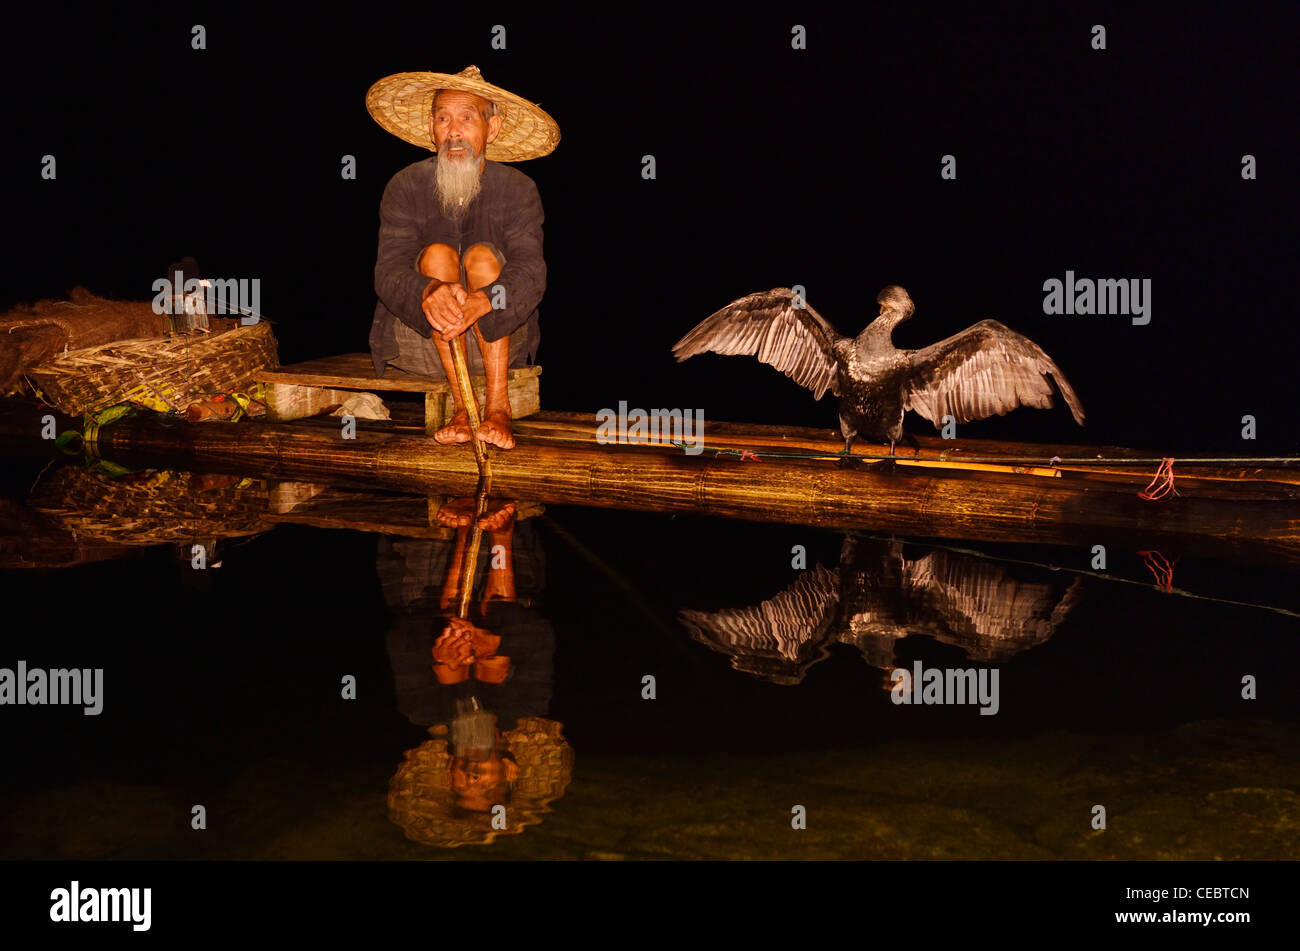 Cormorant fisherman and bird with spread wings reflected in a calm Li river at night from a bamboo raft Xingpingzhen Yangshuo, Guilin, Guangxi China Stock Photo